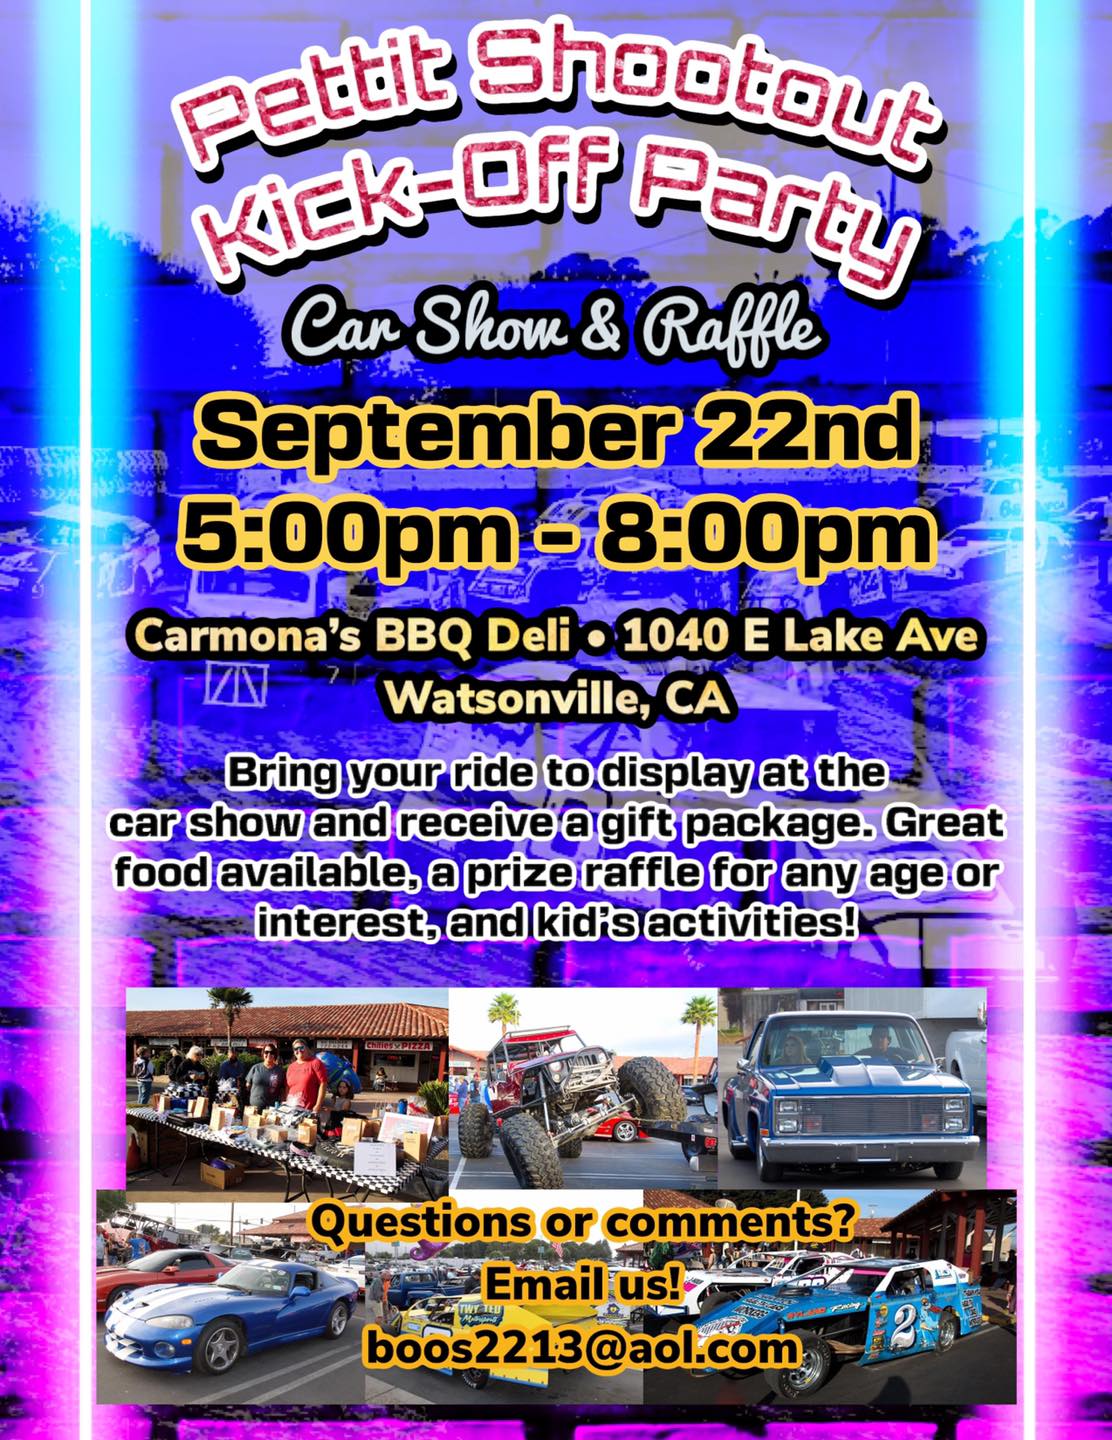 Pettit Shootout Kick-Off Party and Car Show